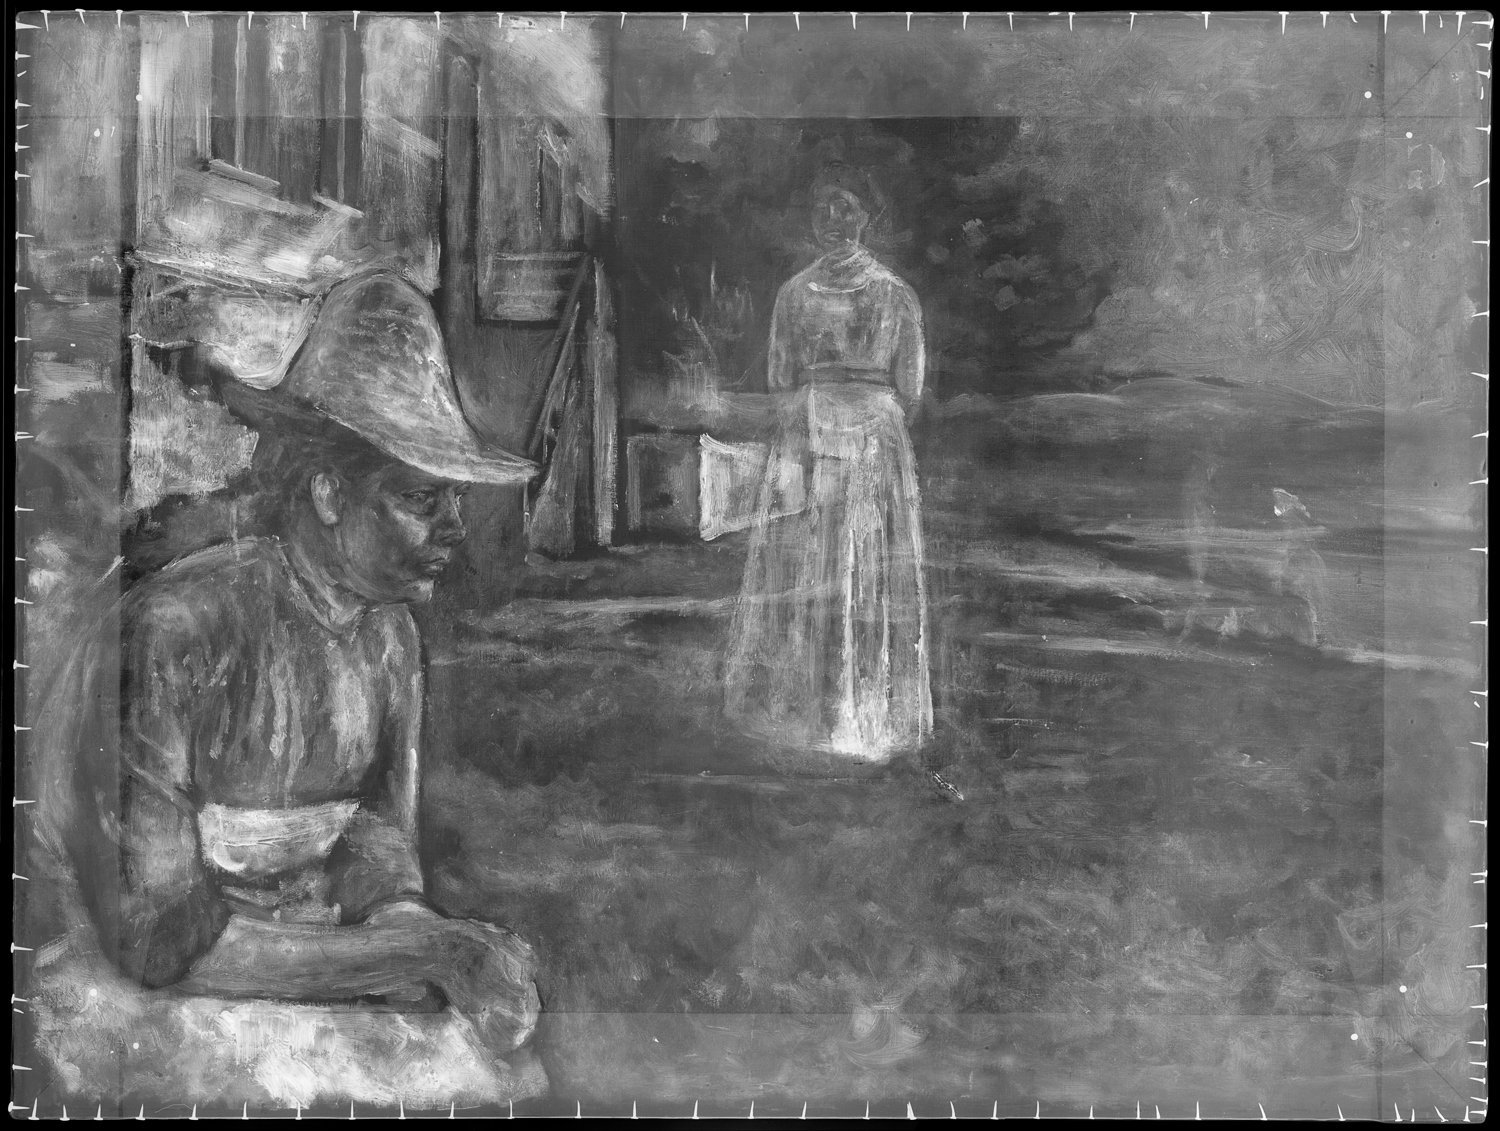 Imagen radiográfica de la obra de Munch "Atardecer"